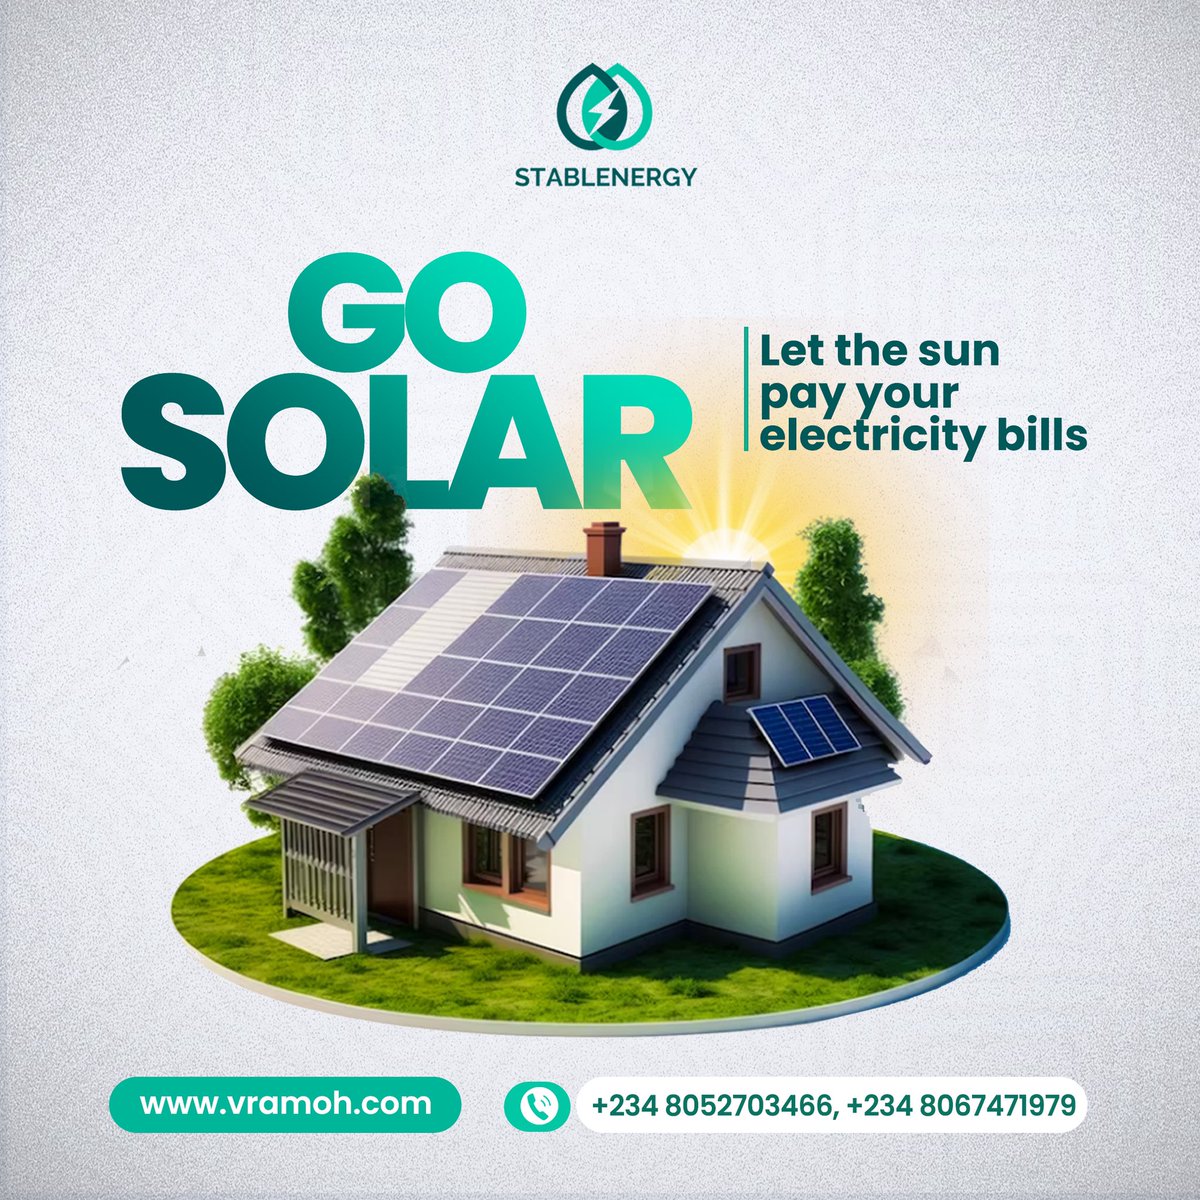 Go solar ✨ #stablenergy #META #solarenergy